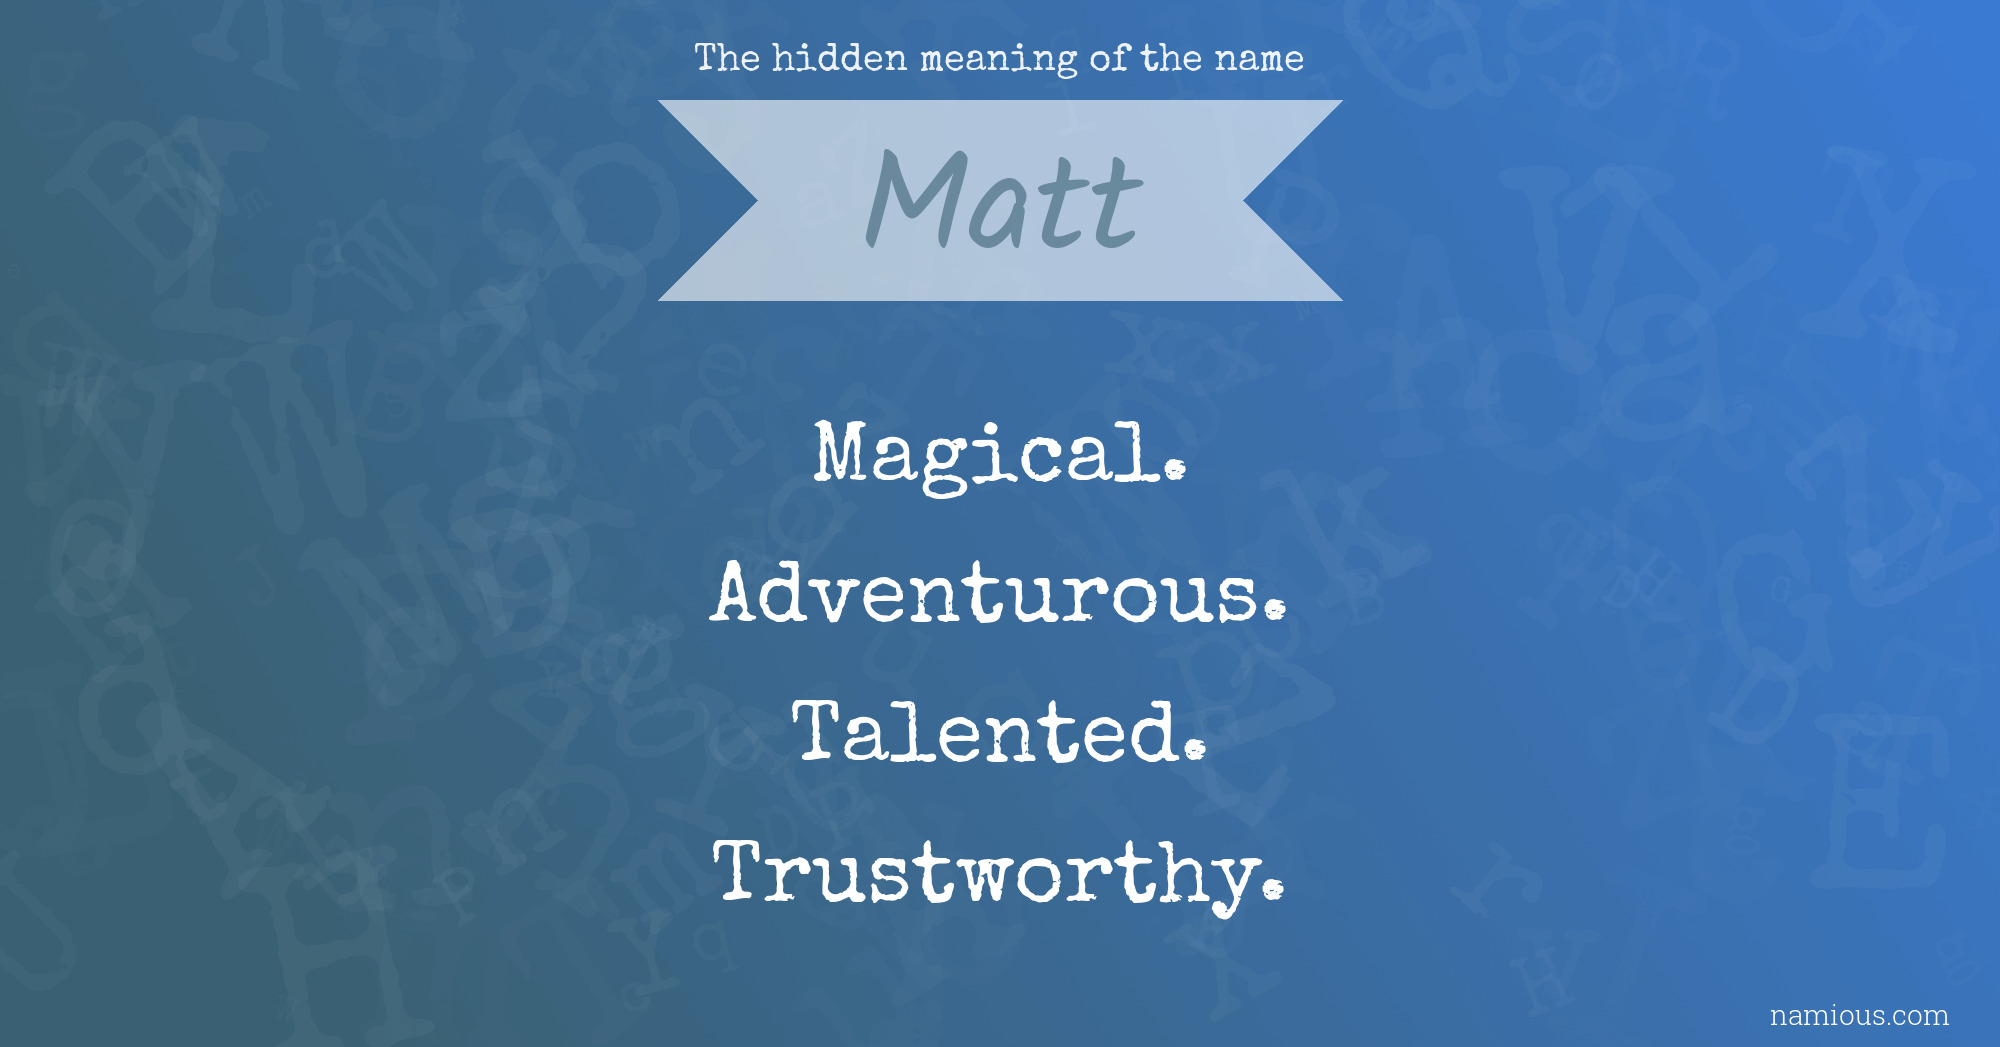 The hidden meaning of the name Matt